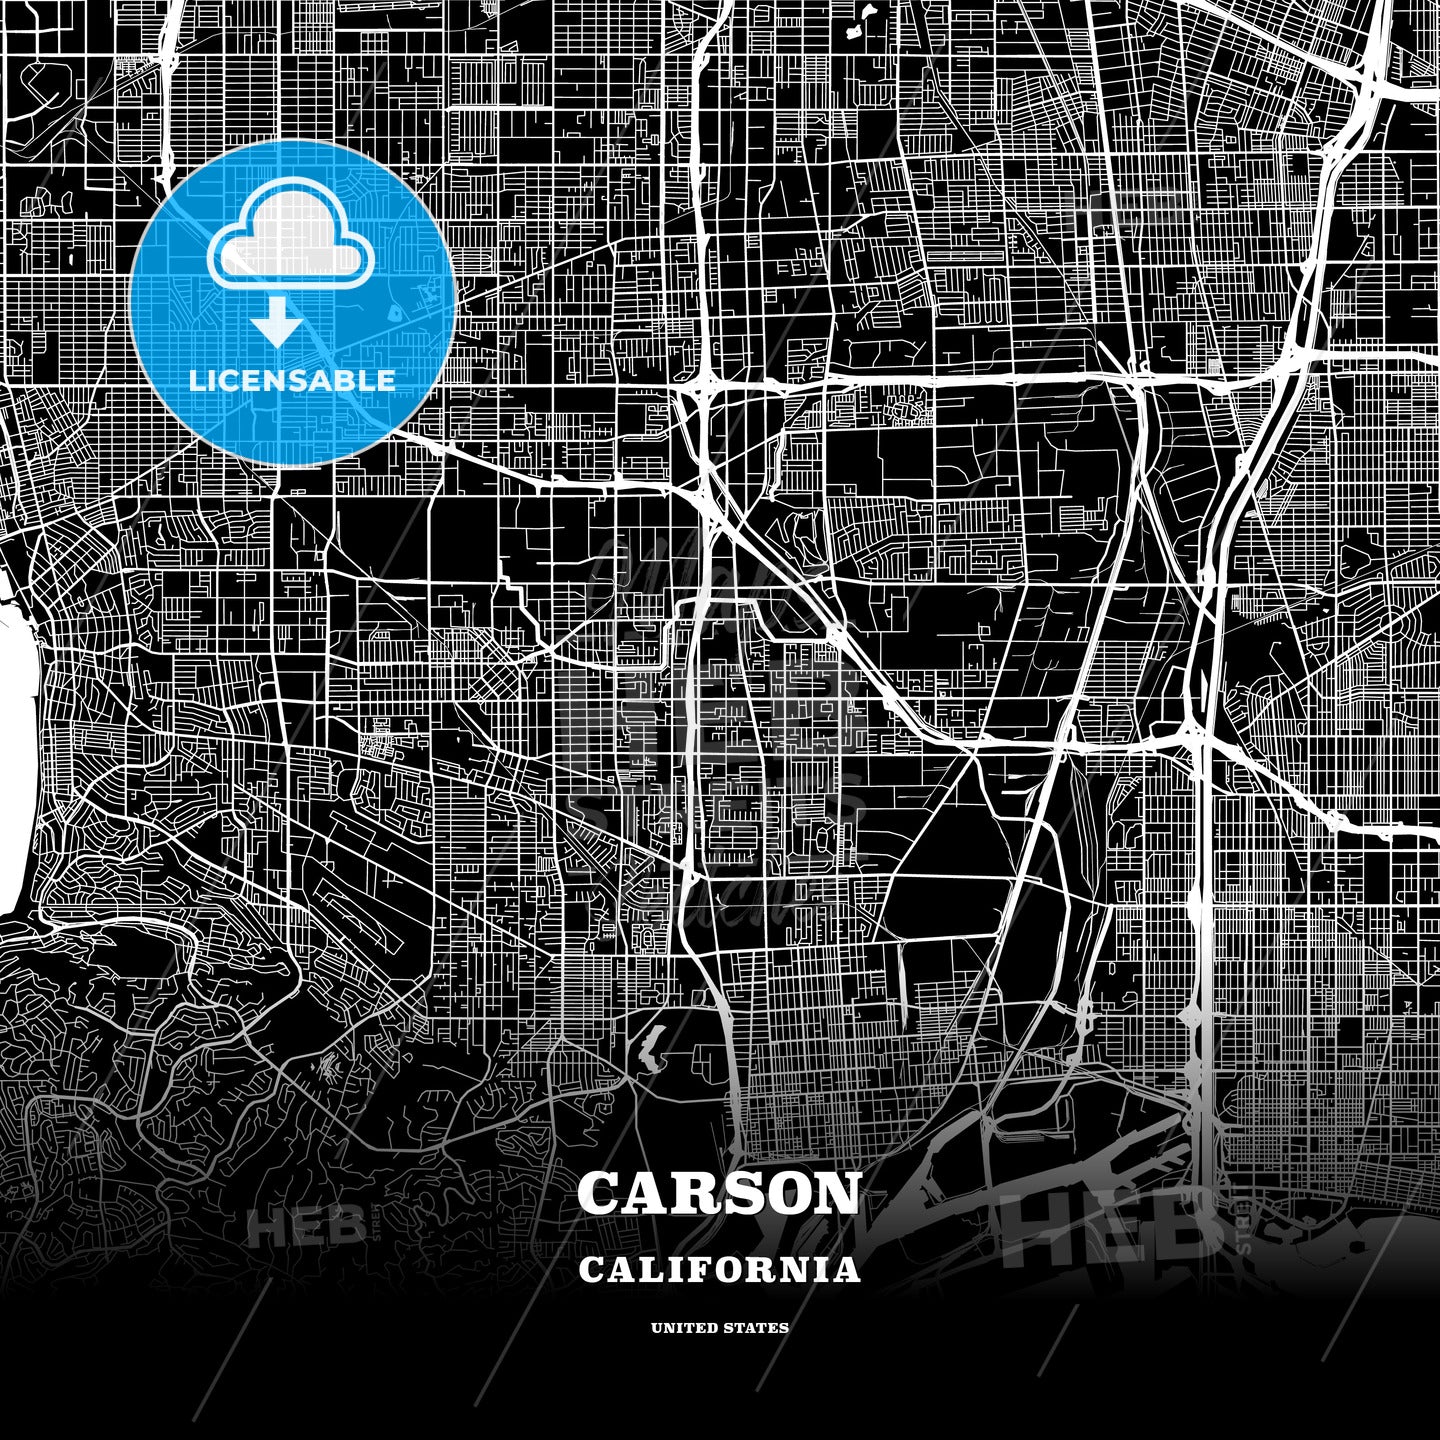 Carson, California, USA map